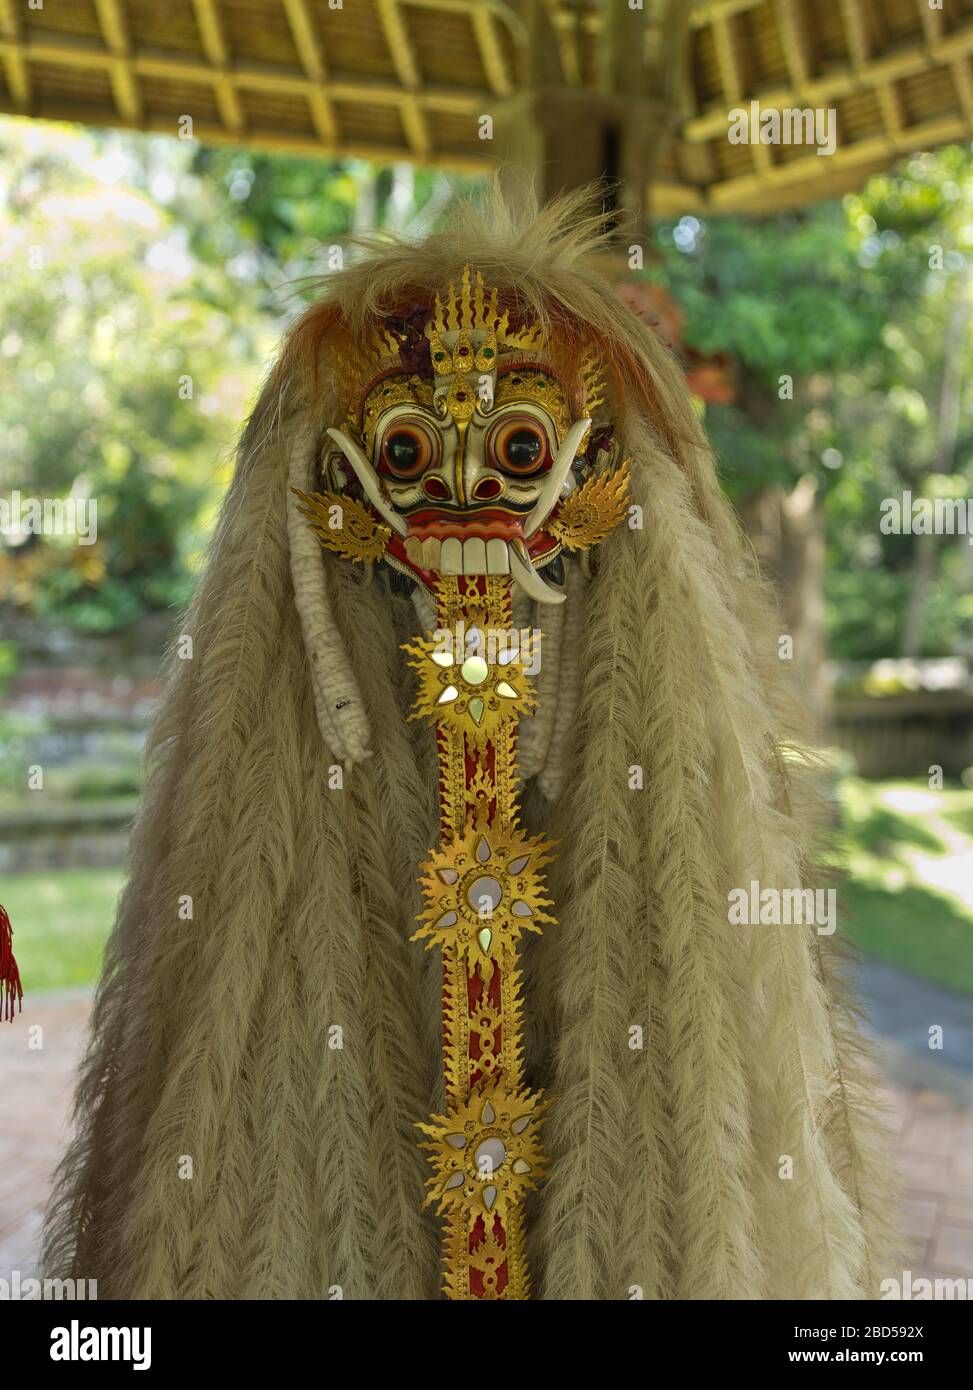 dh Pura Taman Ayun Königlicher Tempel BALI INDONESIEN Balinesischer Hindu Mengwi Tempel Rangda Dämon Königin Maske indonesischen Mythos Mythologie Stockfoto